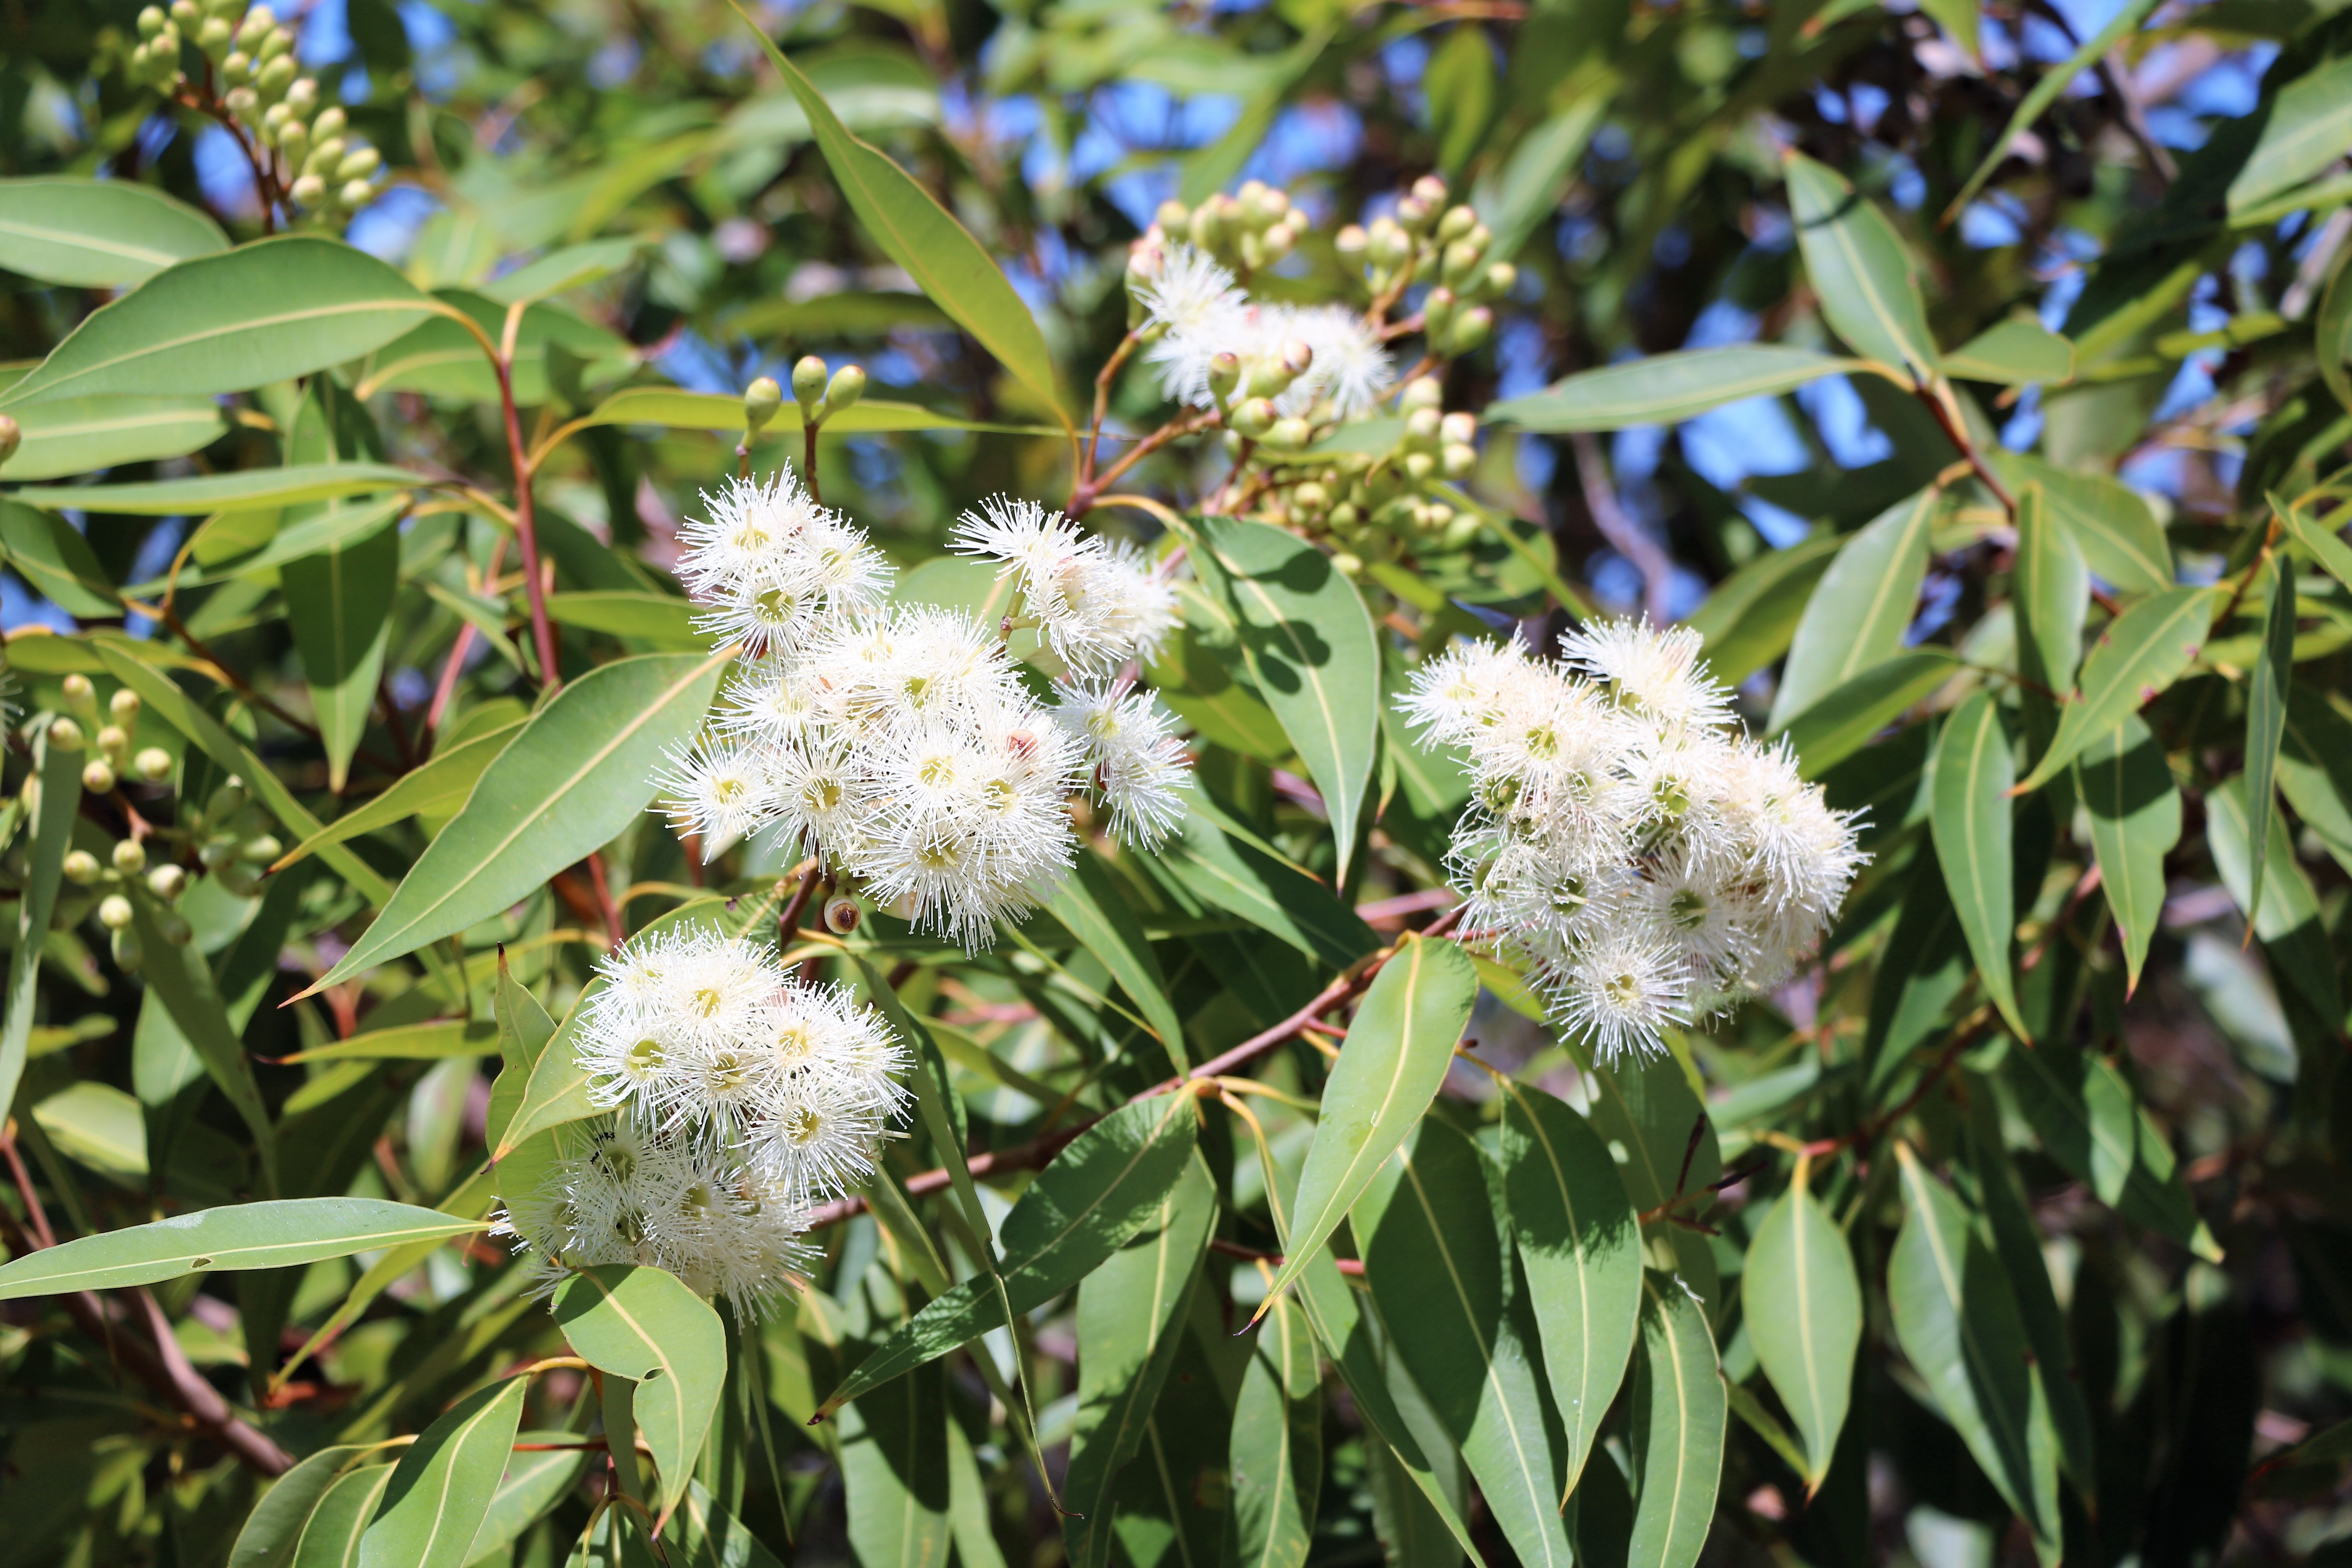 Eucalyptus branch with white flowers in Sydney, Australia